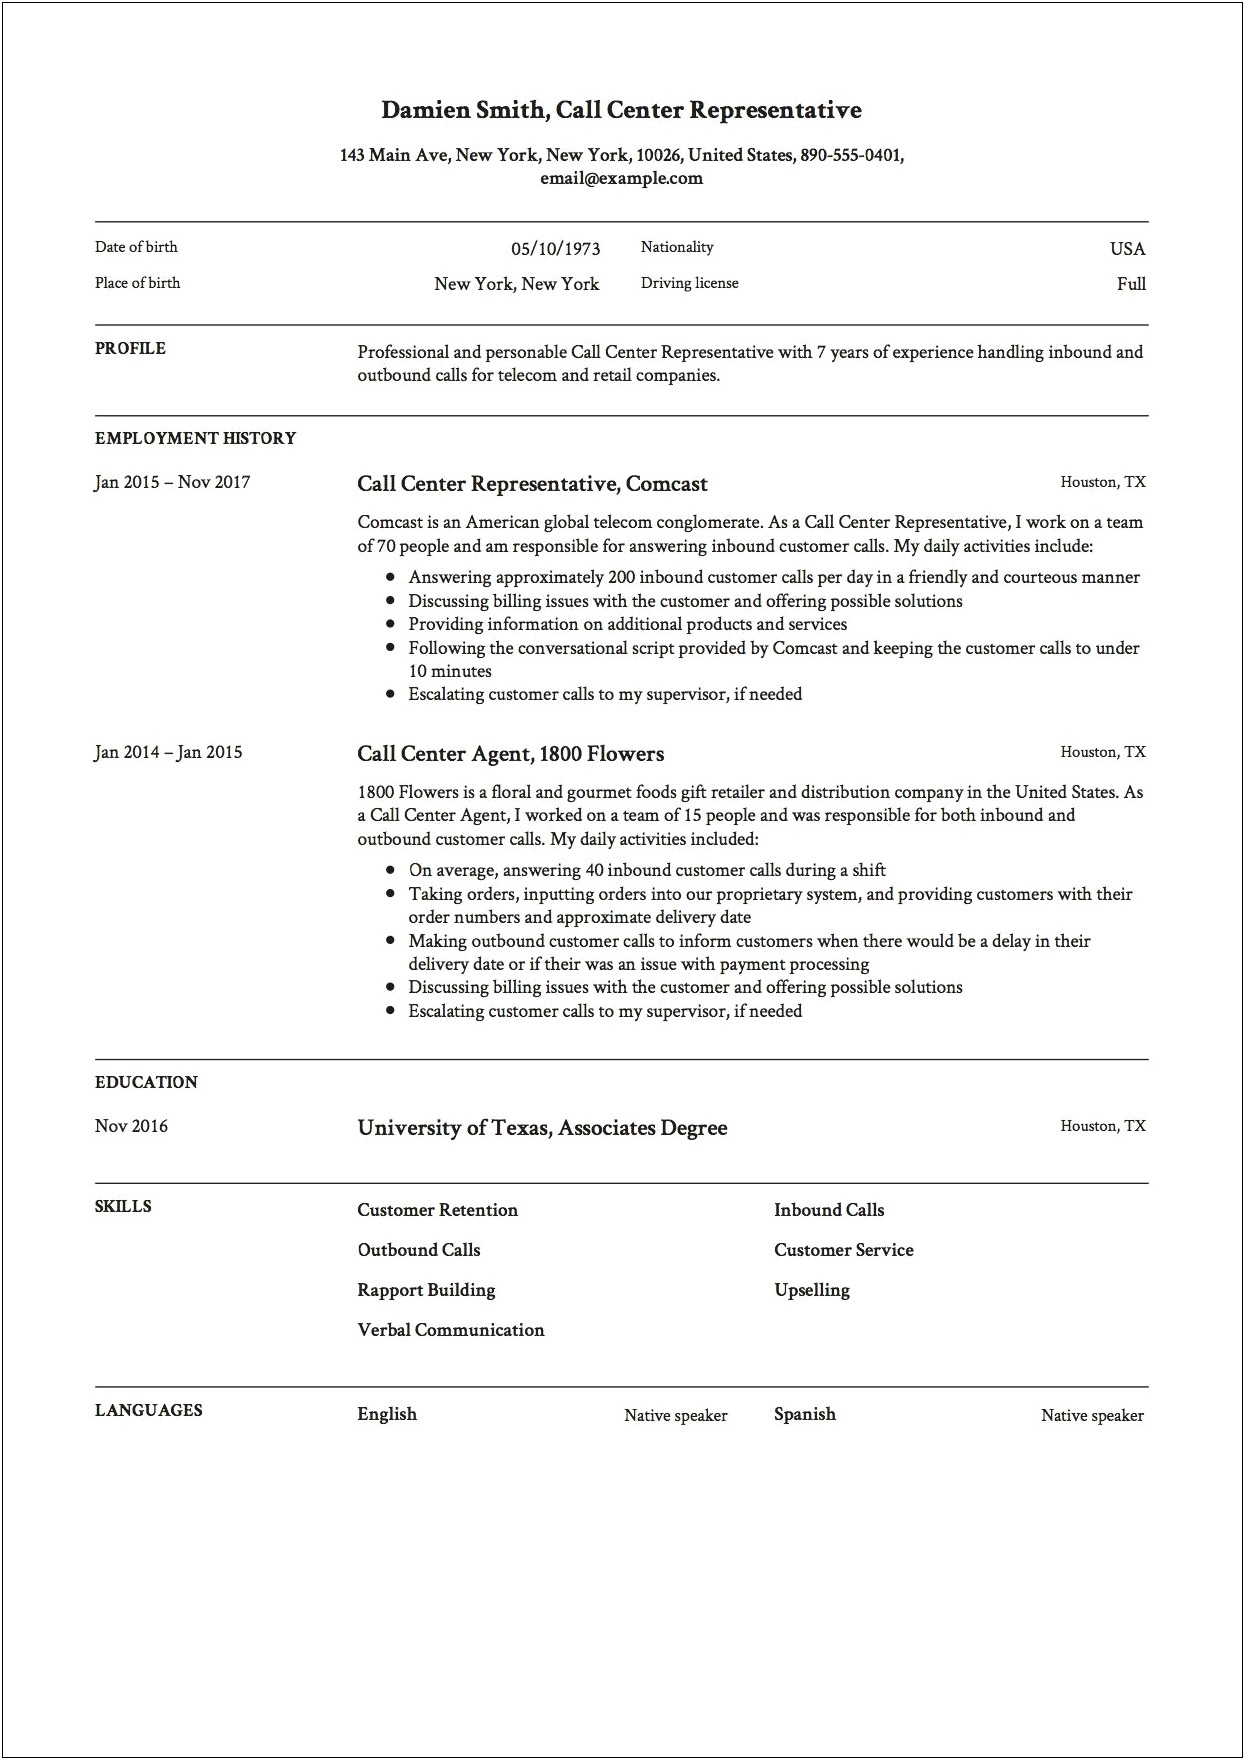 Job Description For Call Center Agent On Resume